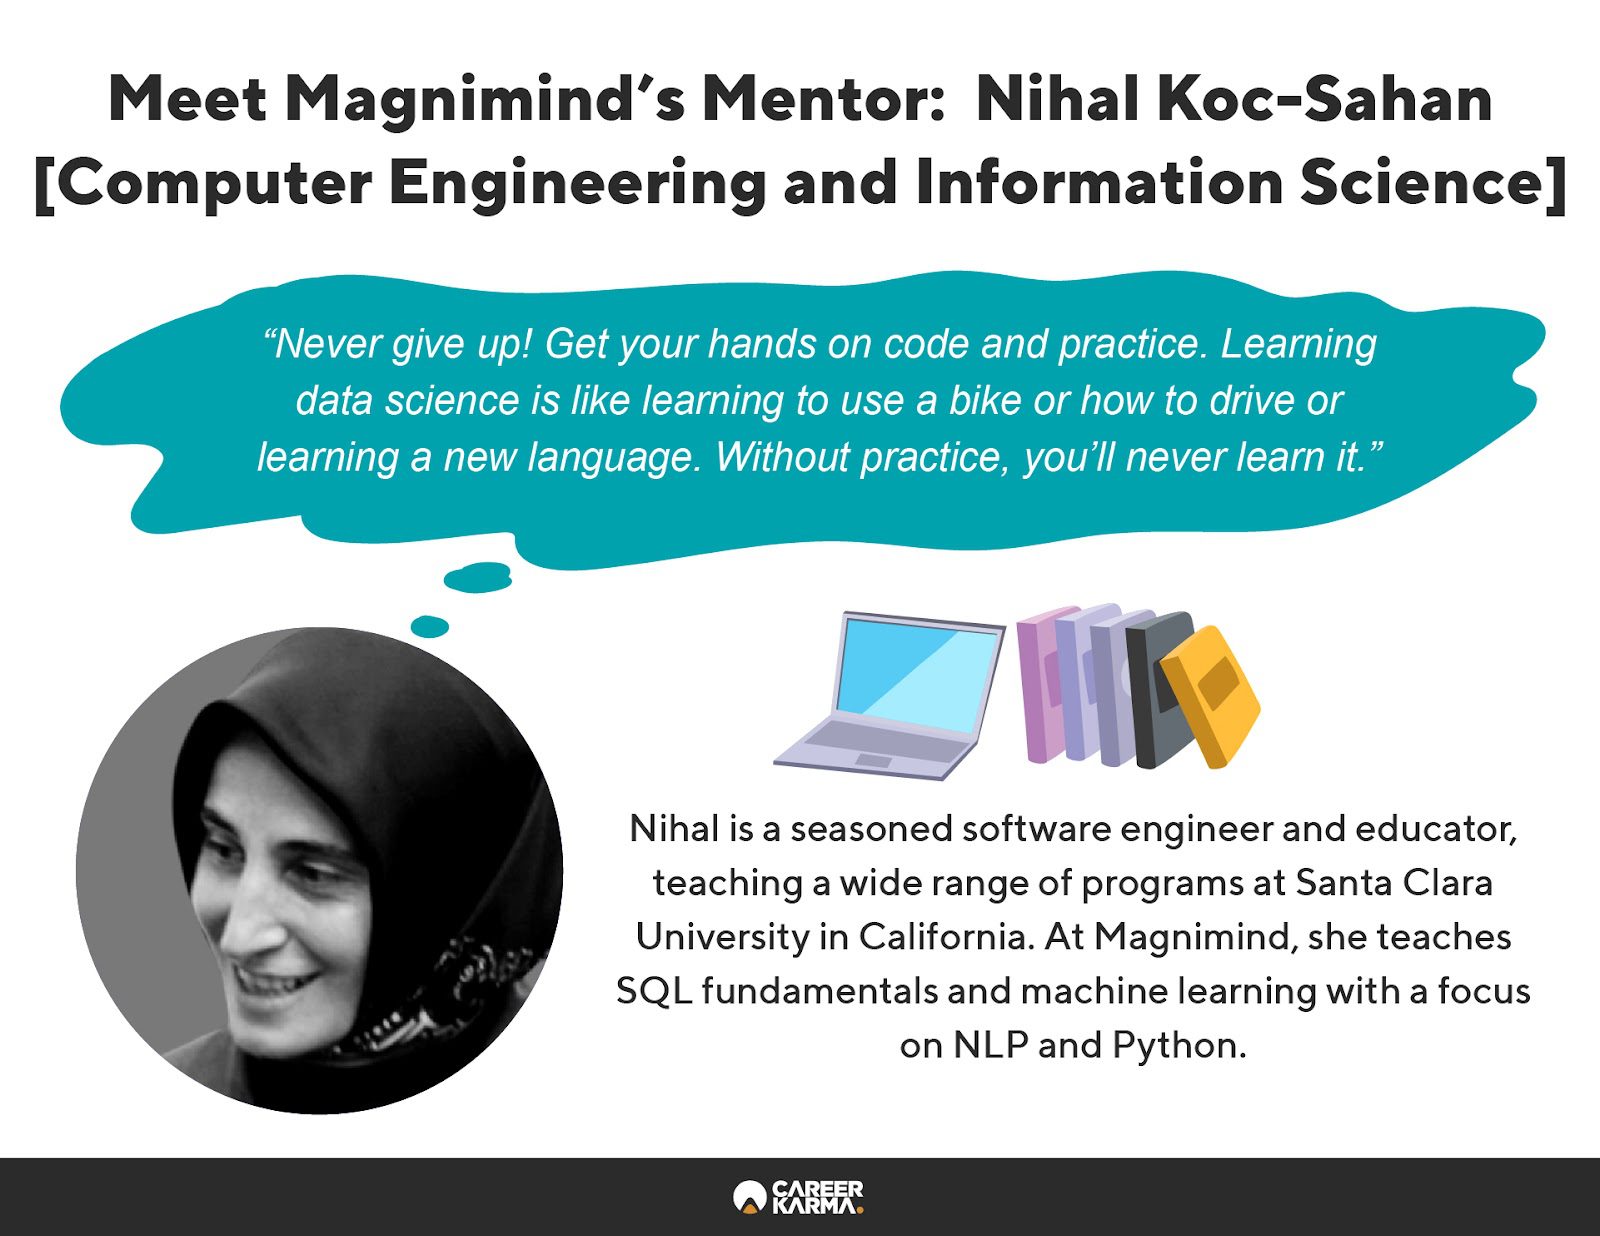 Infographic highlighting the profile of Magnimind’s mentor Nihal Koc-Sahan